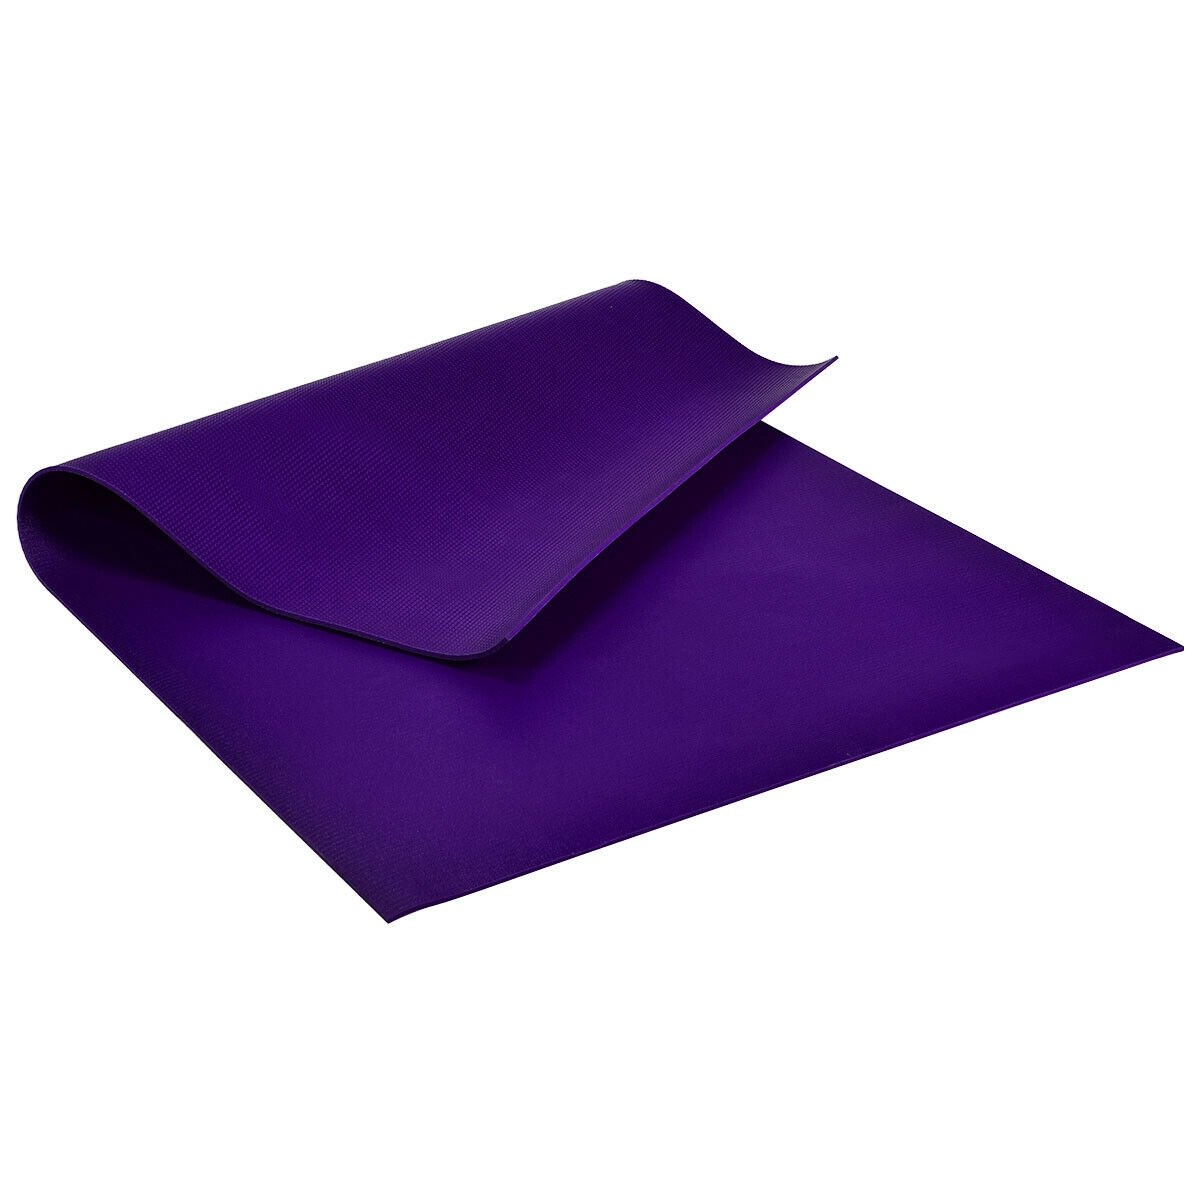 6 x 4 Feet Large Yoga Mat, Purple at Gallery Canada